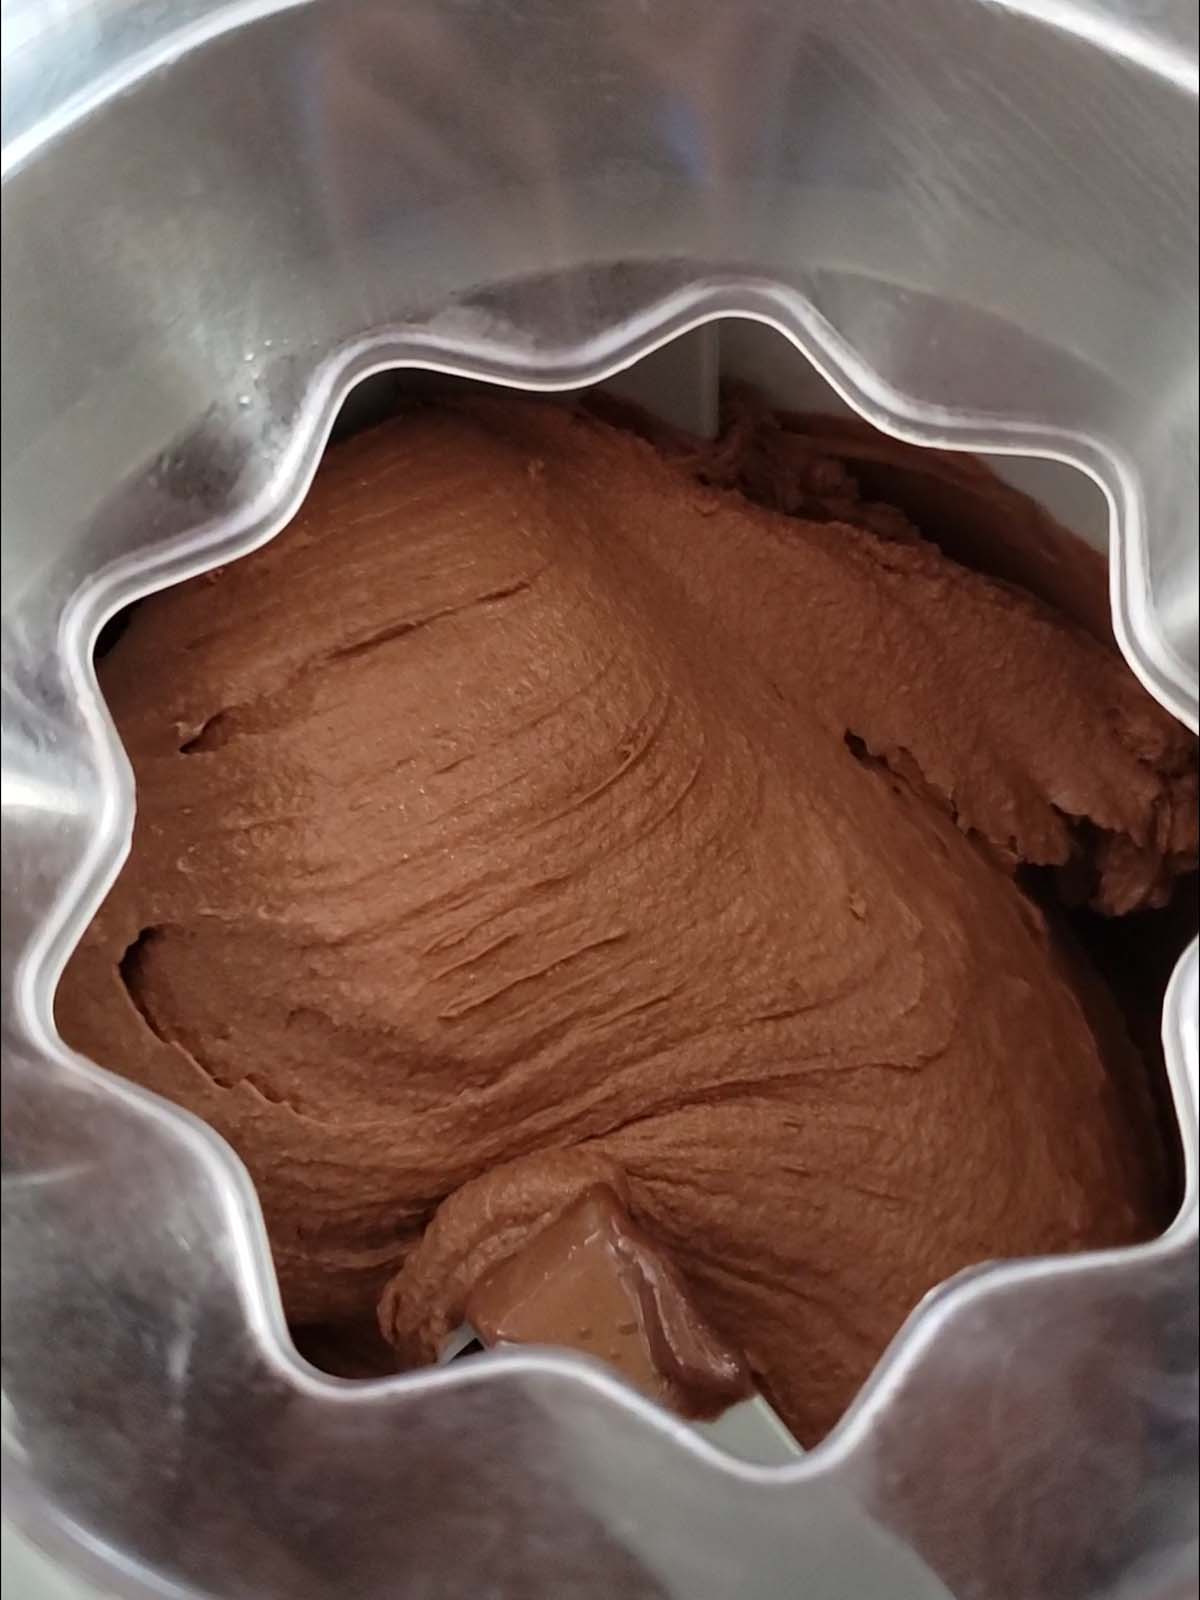 Chocolate ice cream churning in an ice cream maker.